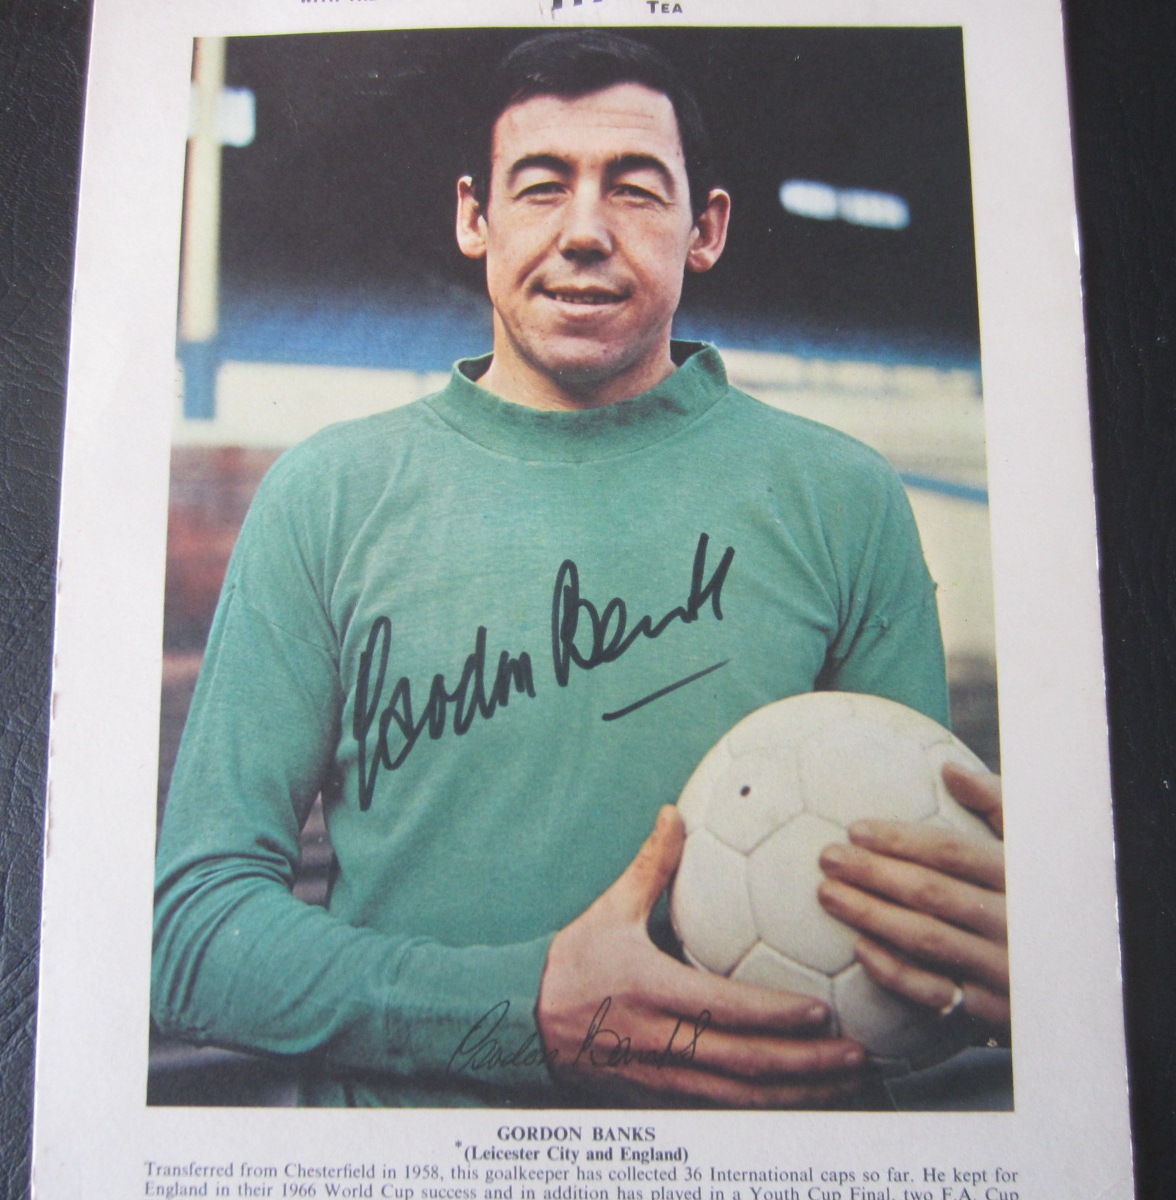 GORDON BANKS HAND SIGNED TYPHOO TEA CARD - LEICESTER, STOKE, ENGLAND 1966 WORLD CUP